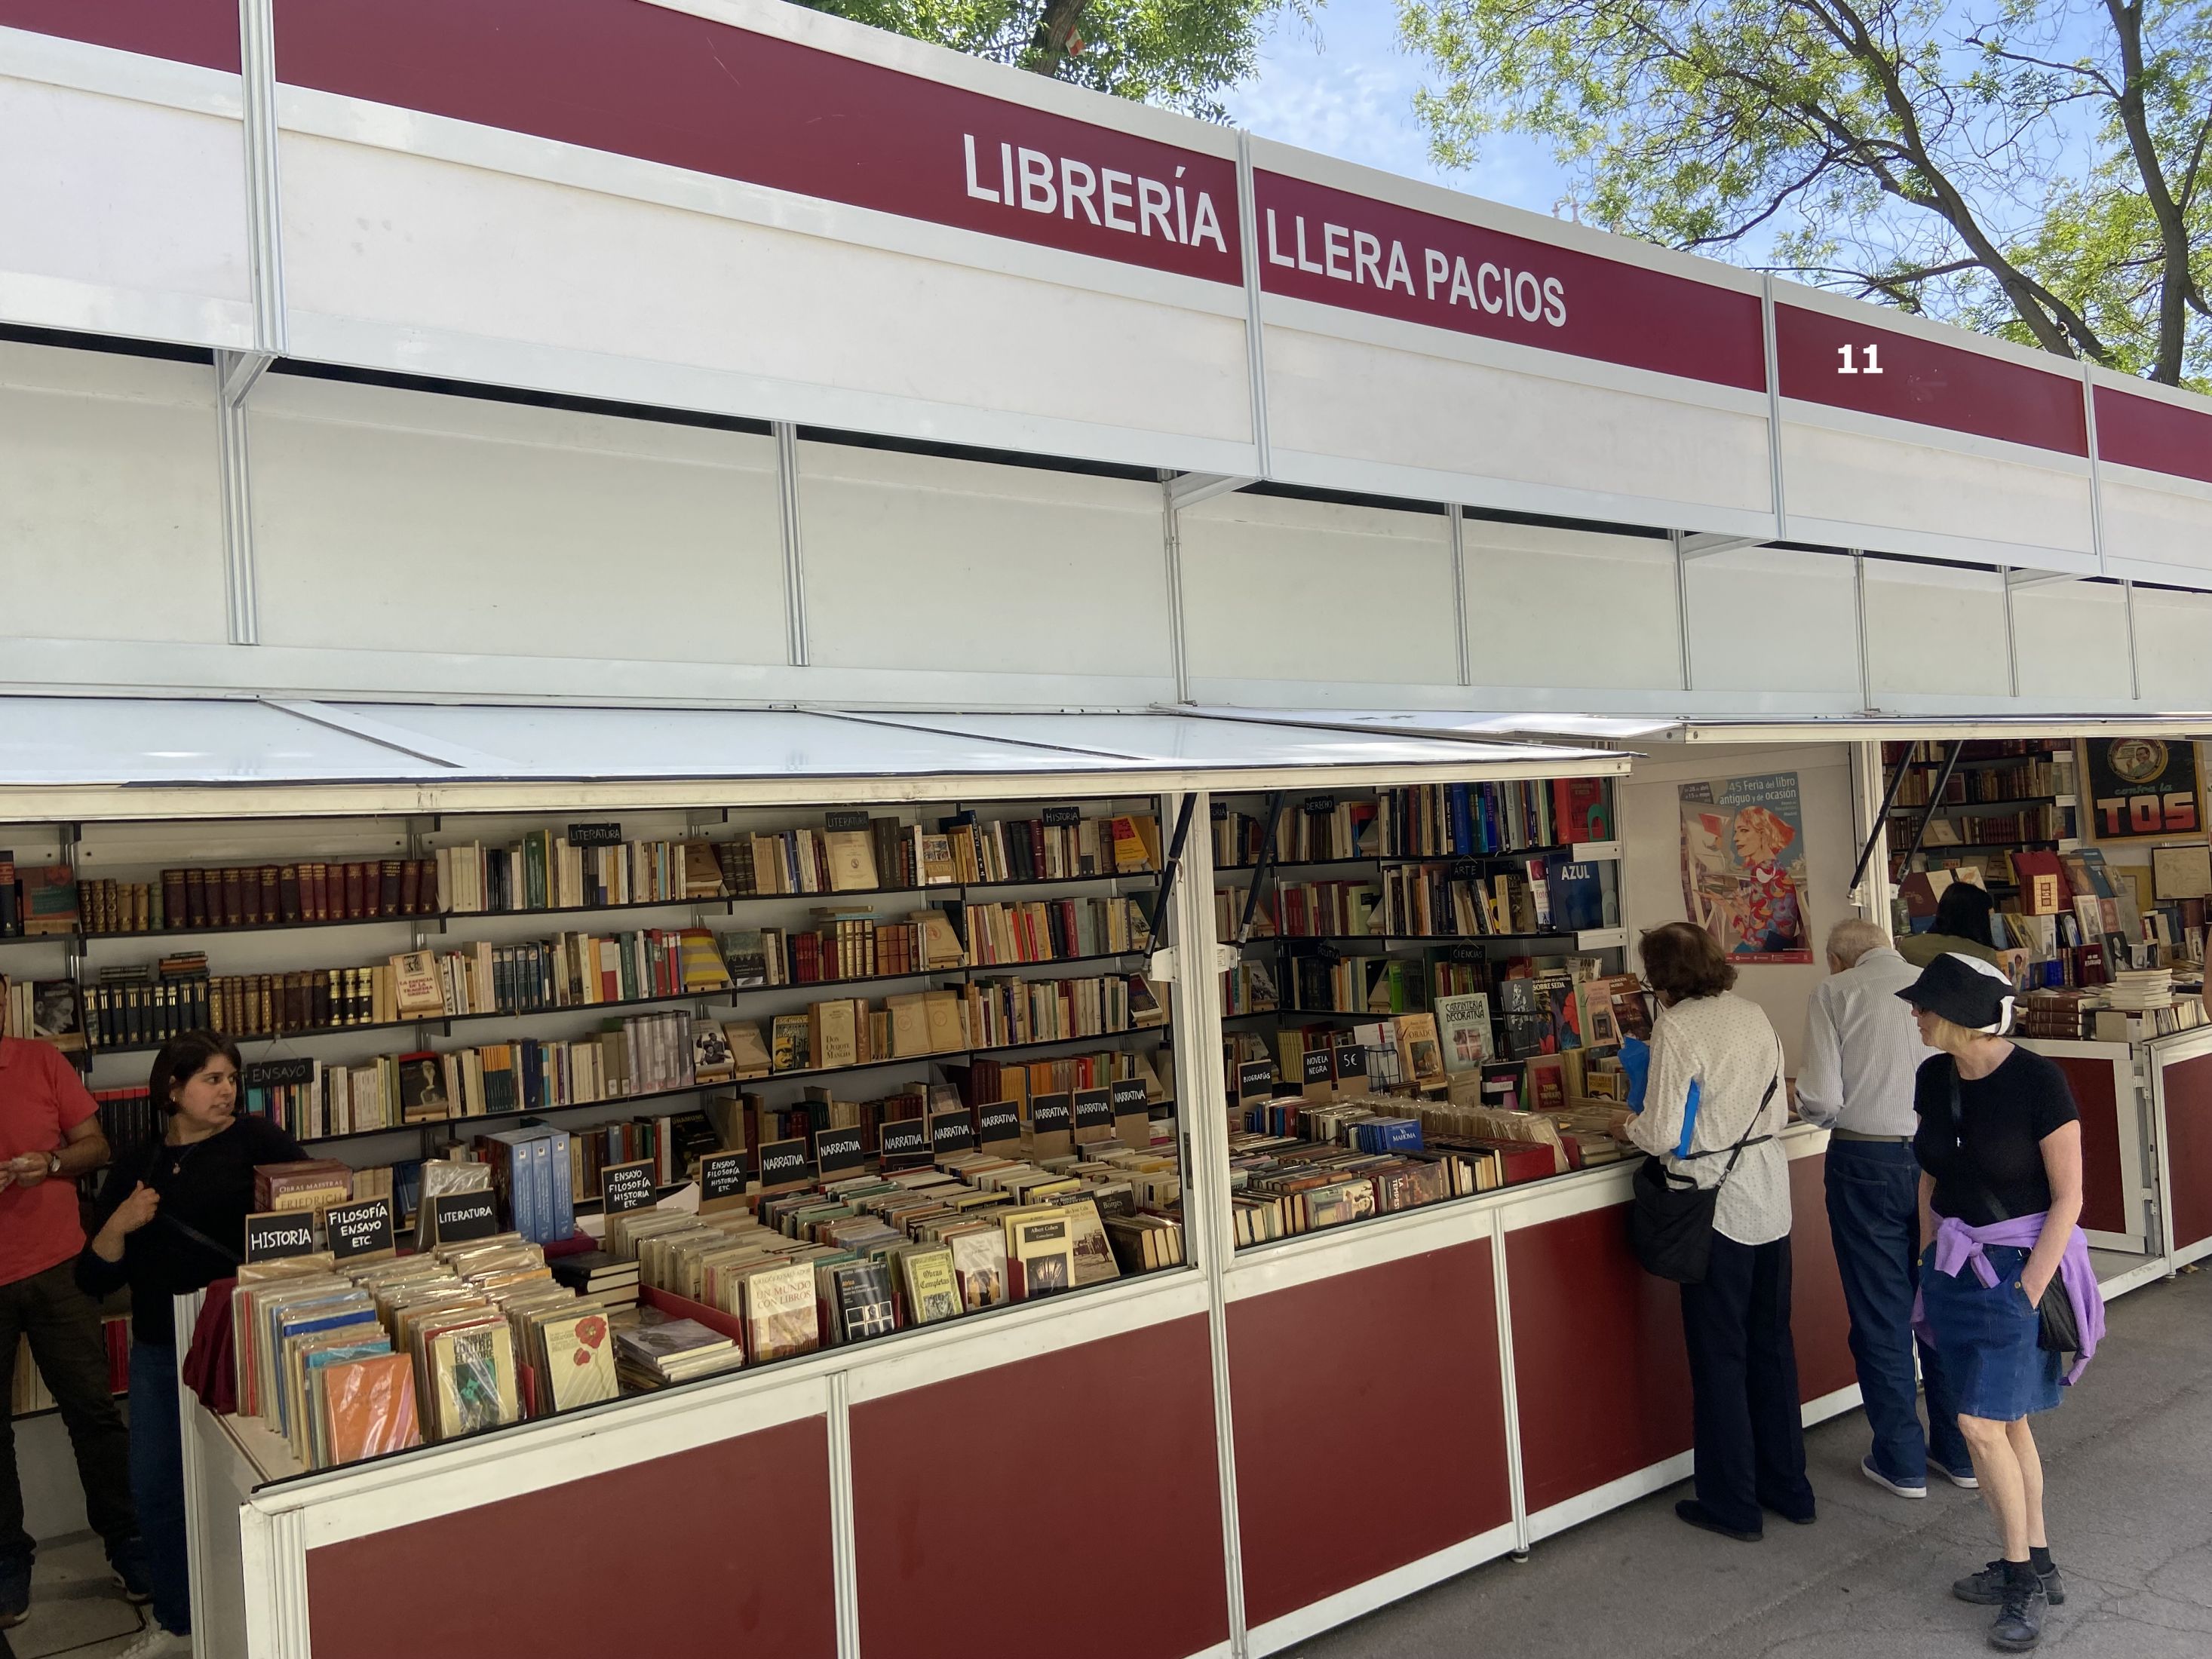 Libreria Llera Pacios